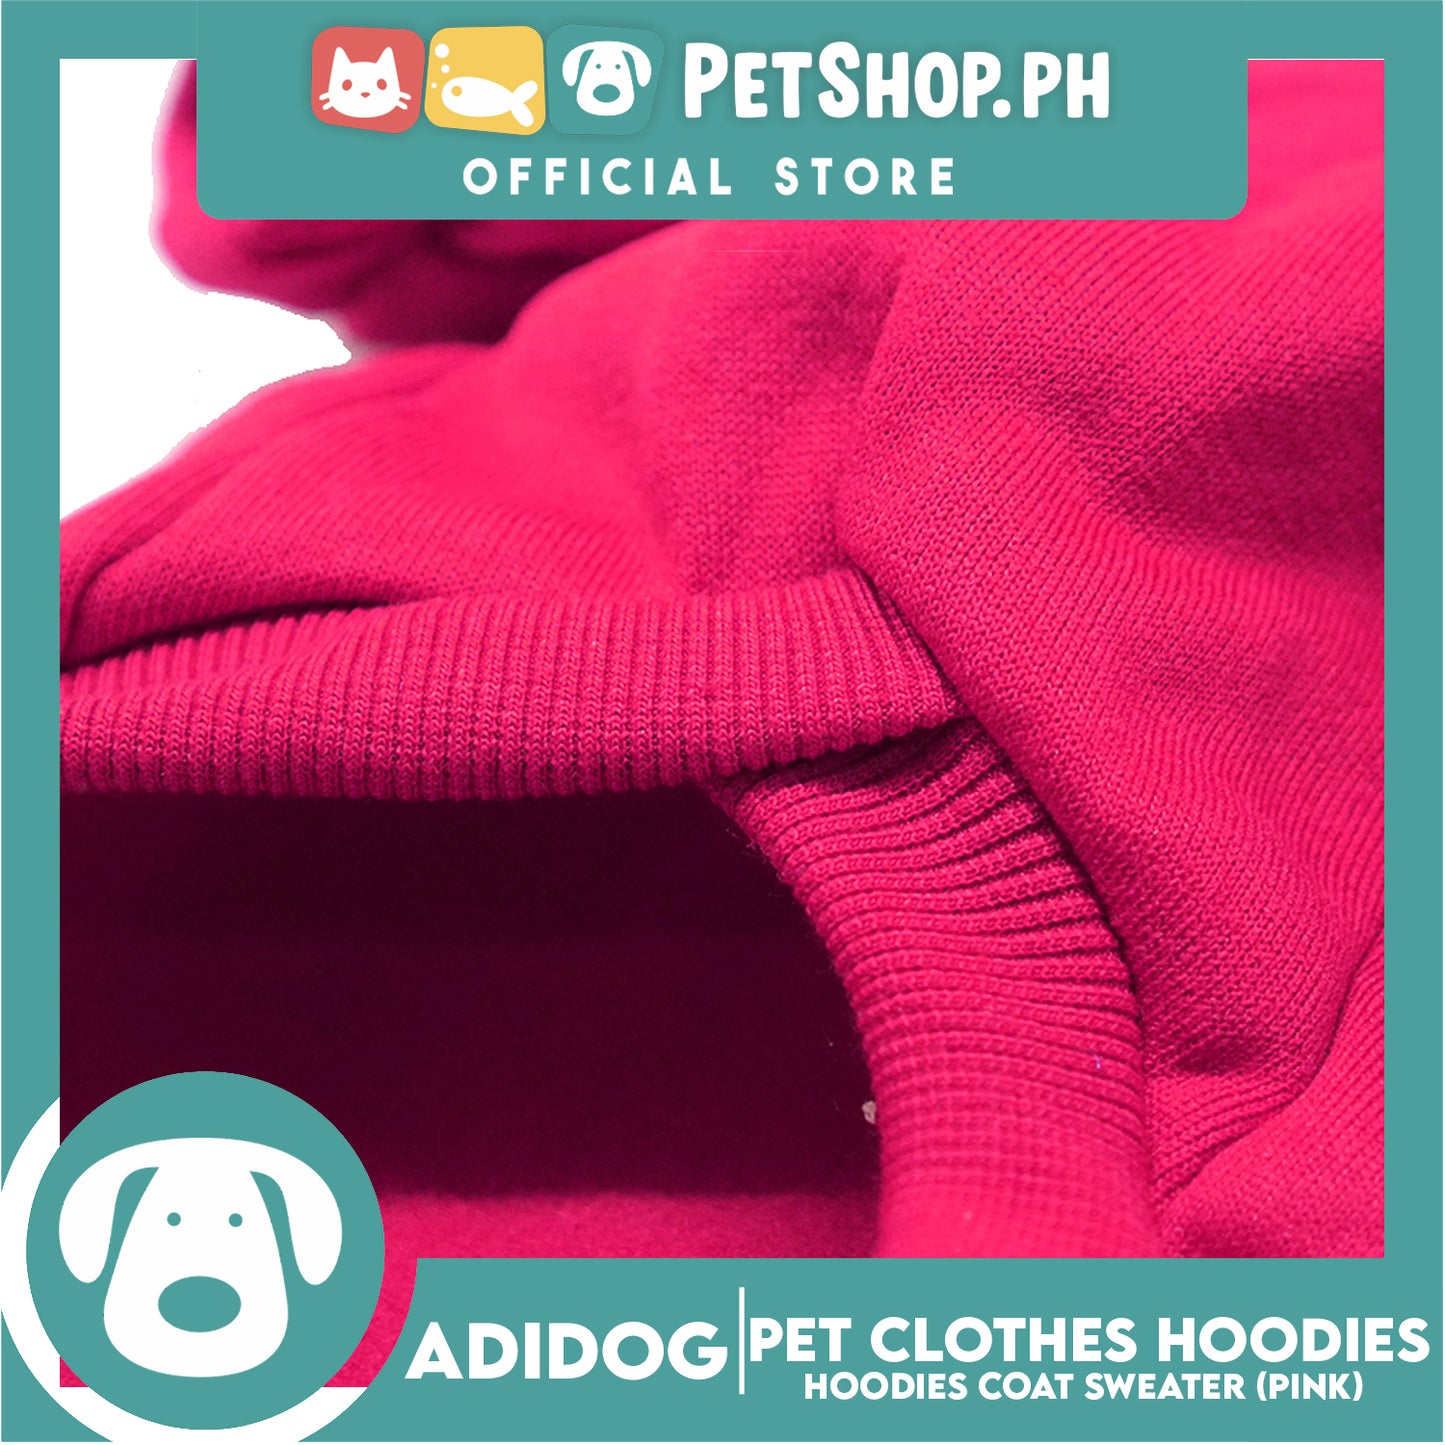 Adidog Pet Clothes Hoodies, Cute Warm Winter Hoodies Coat Sweater (Pink) Medium